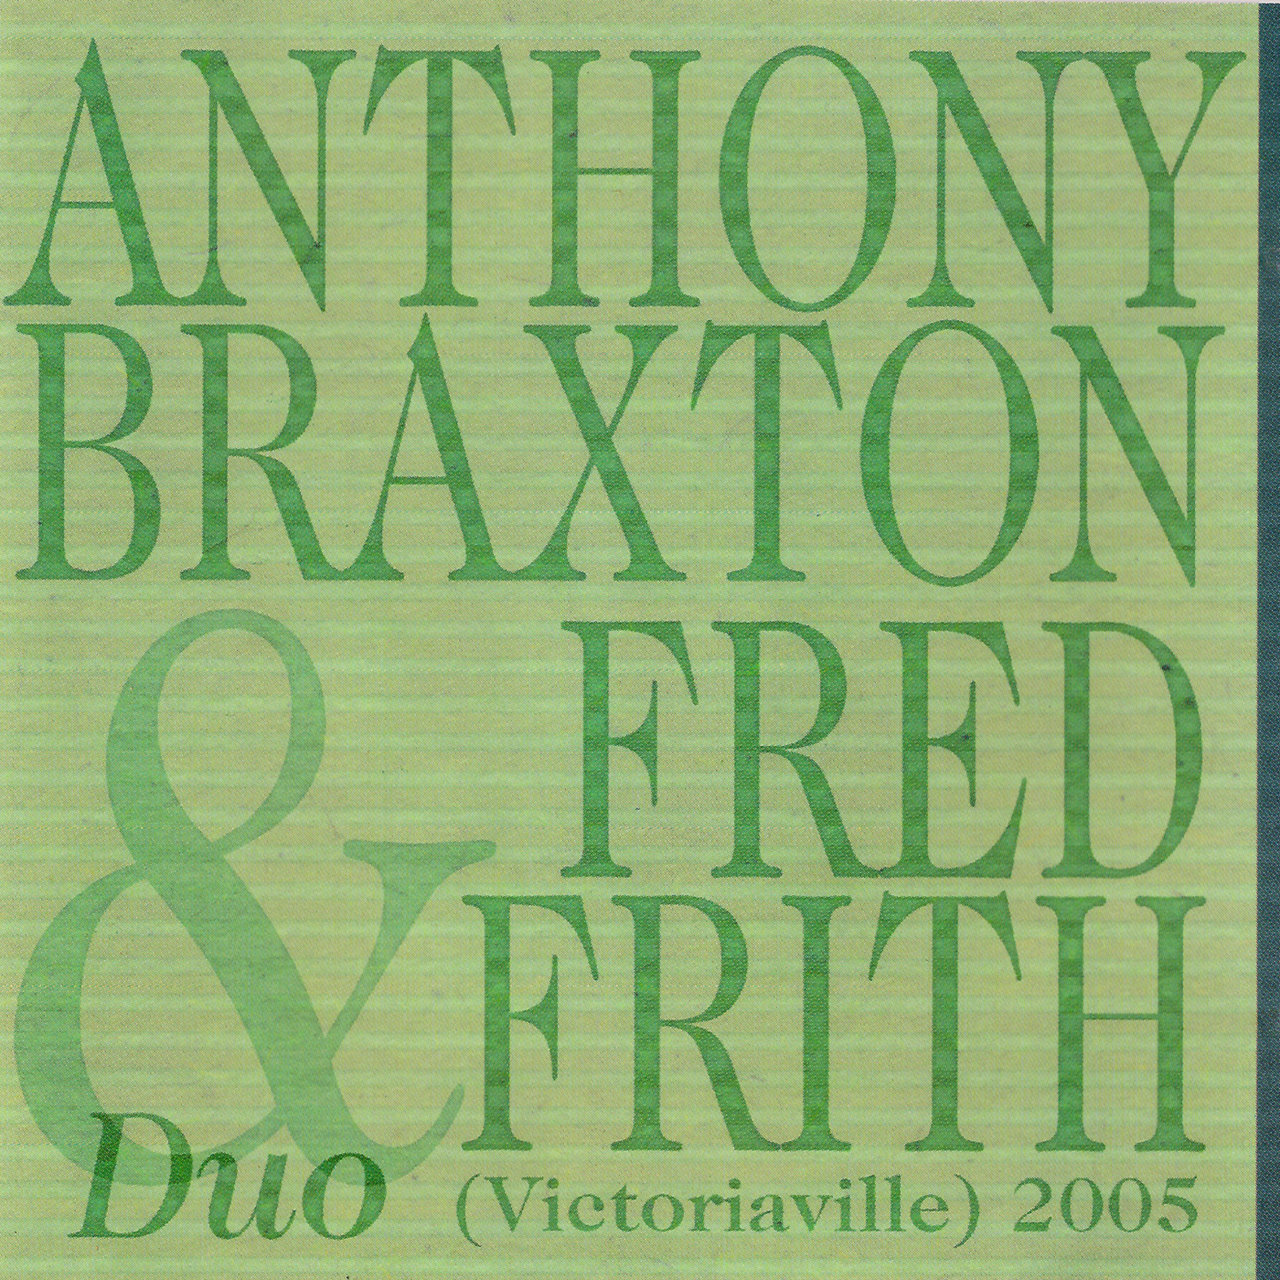 Duo (Victoriaville) 2005 [2006]